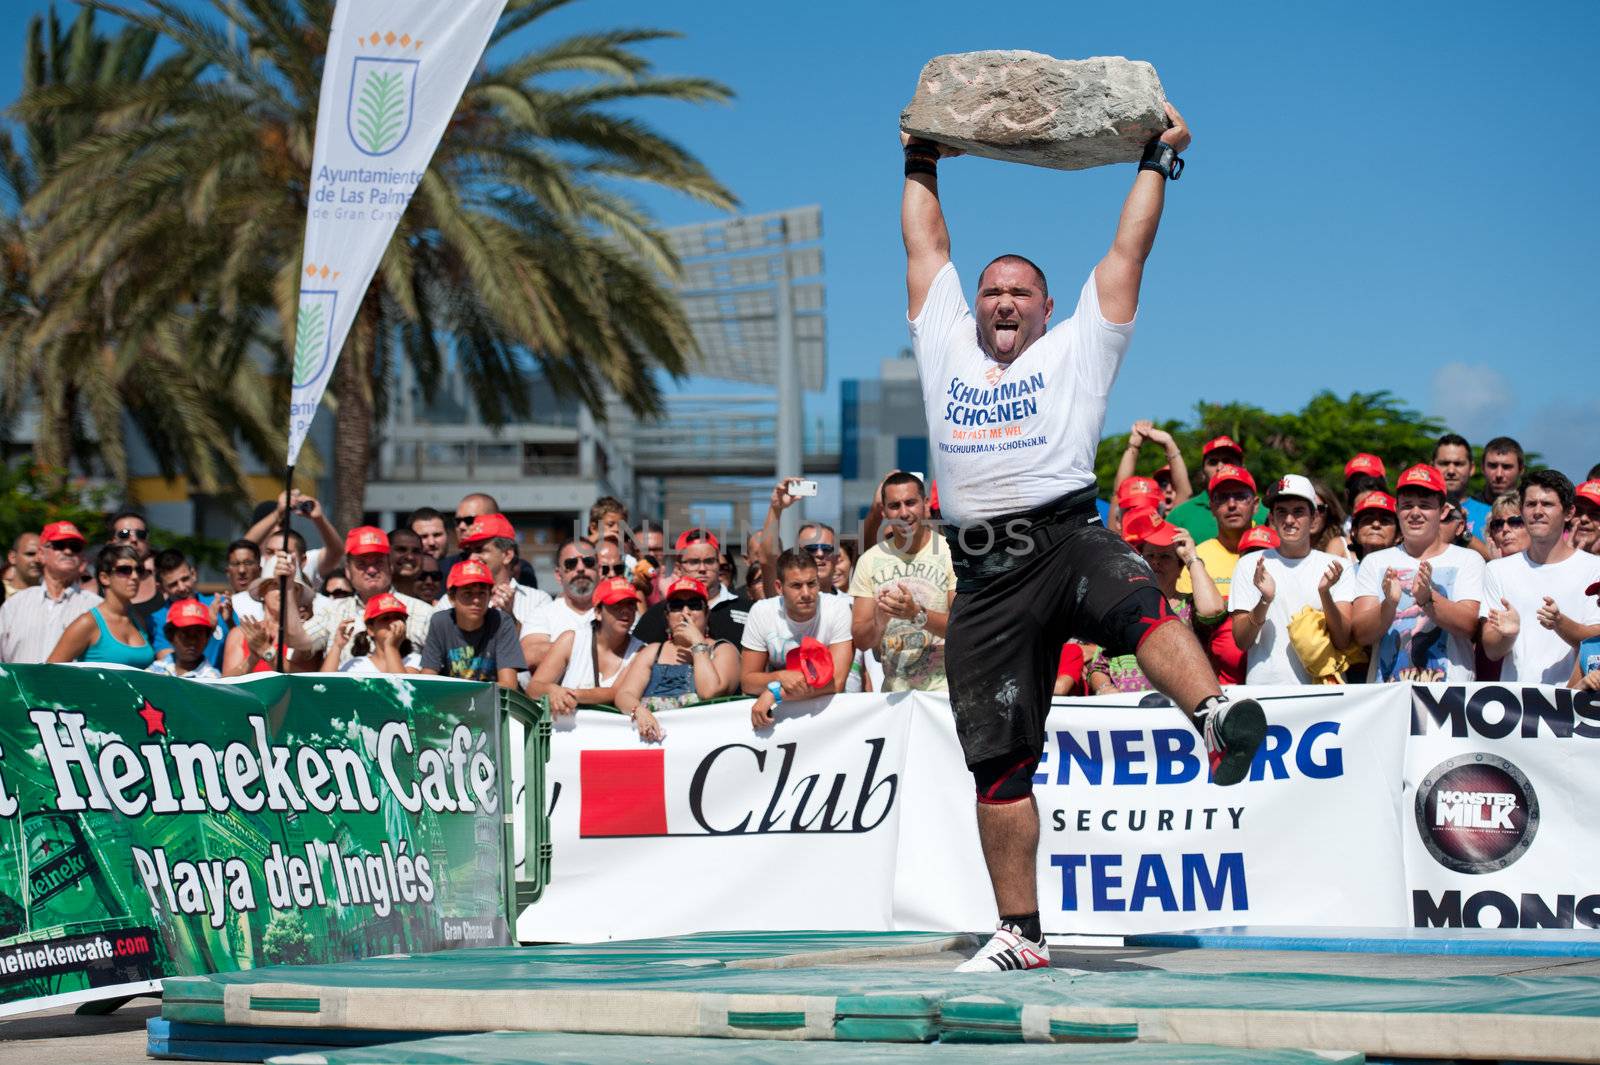 CANARY ISLANDS – SEPTEMBER 03: Akos Nagy from Hungary lifting a heavy stone during Strongman Champions League in Las Palmas September 03, 2011 in Canary Islands, Spain